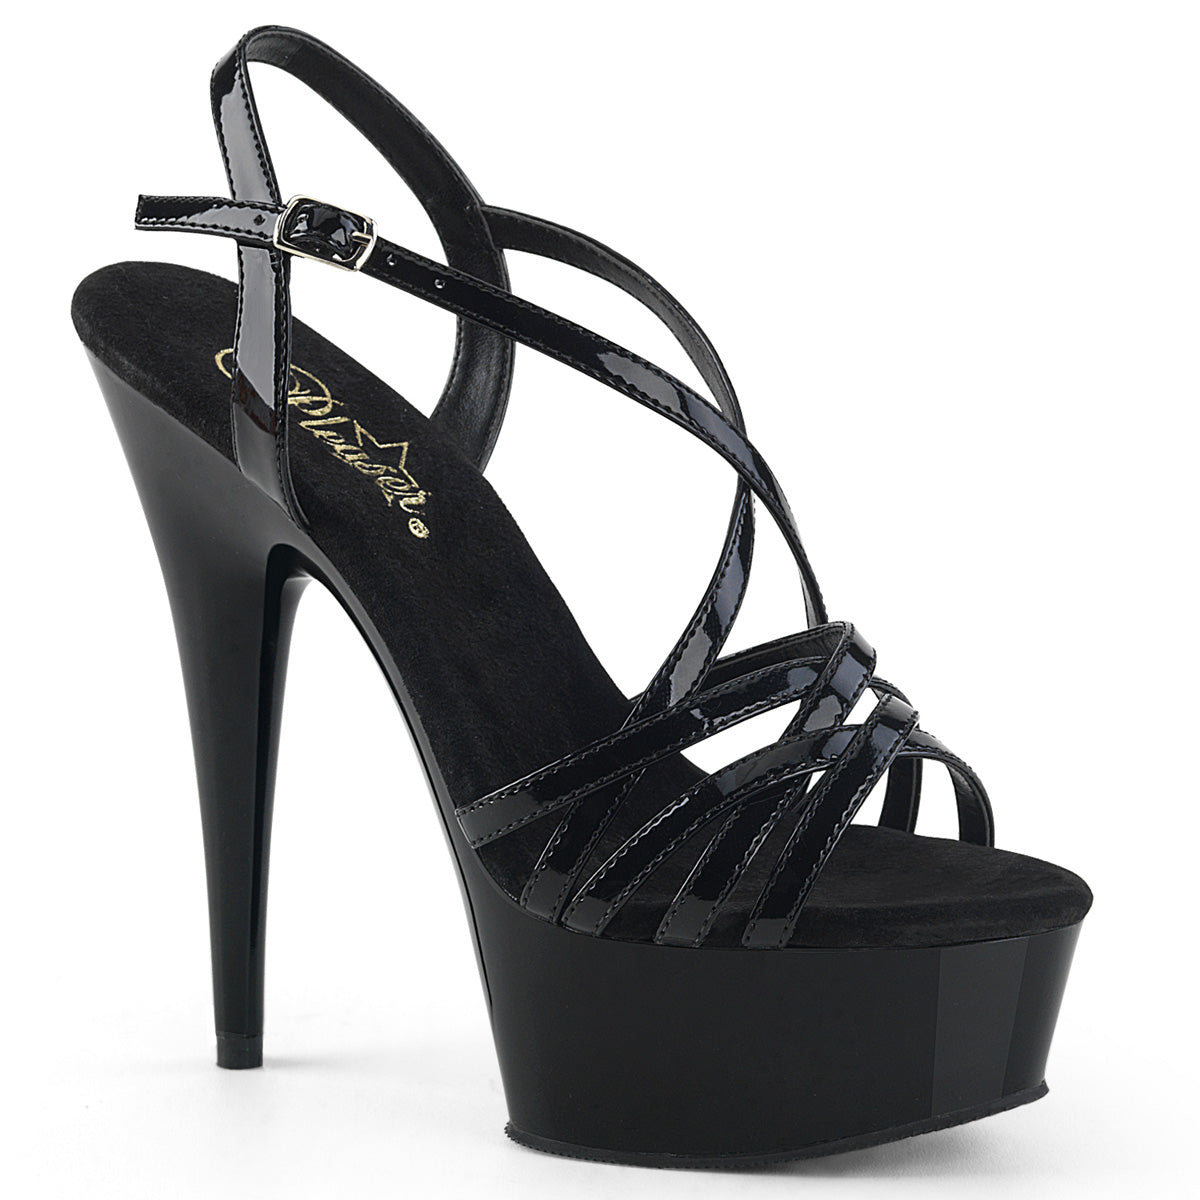 DELIGHT-613 6" Heel Black Patent Pole Dancing Platforms-Pleaser- Sexy Shoes